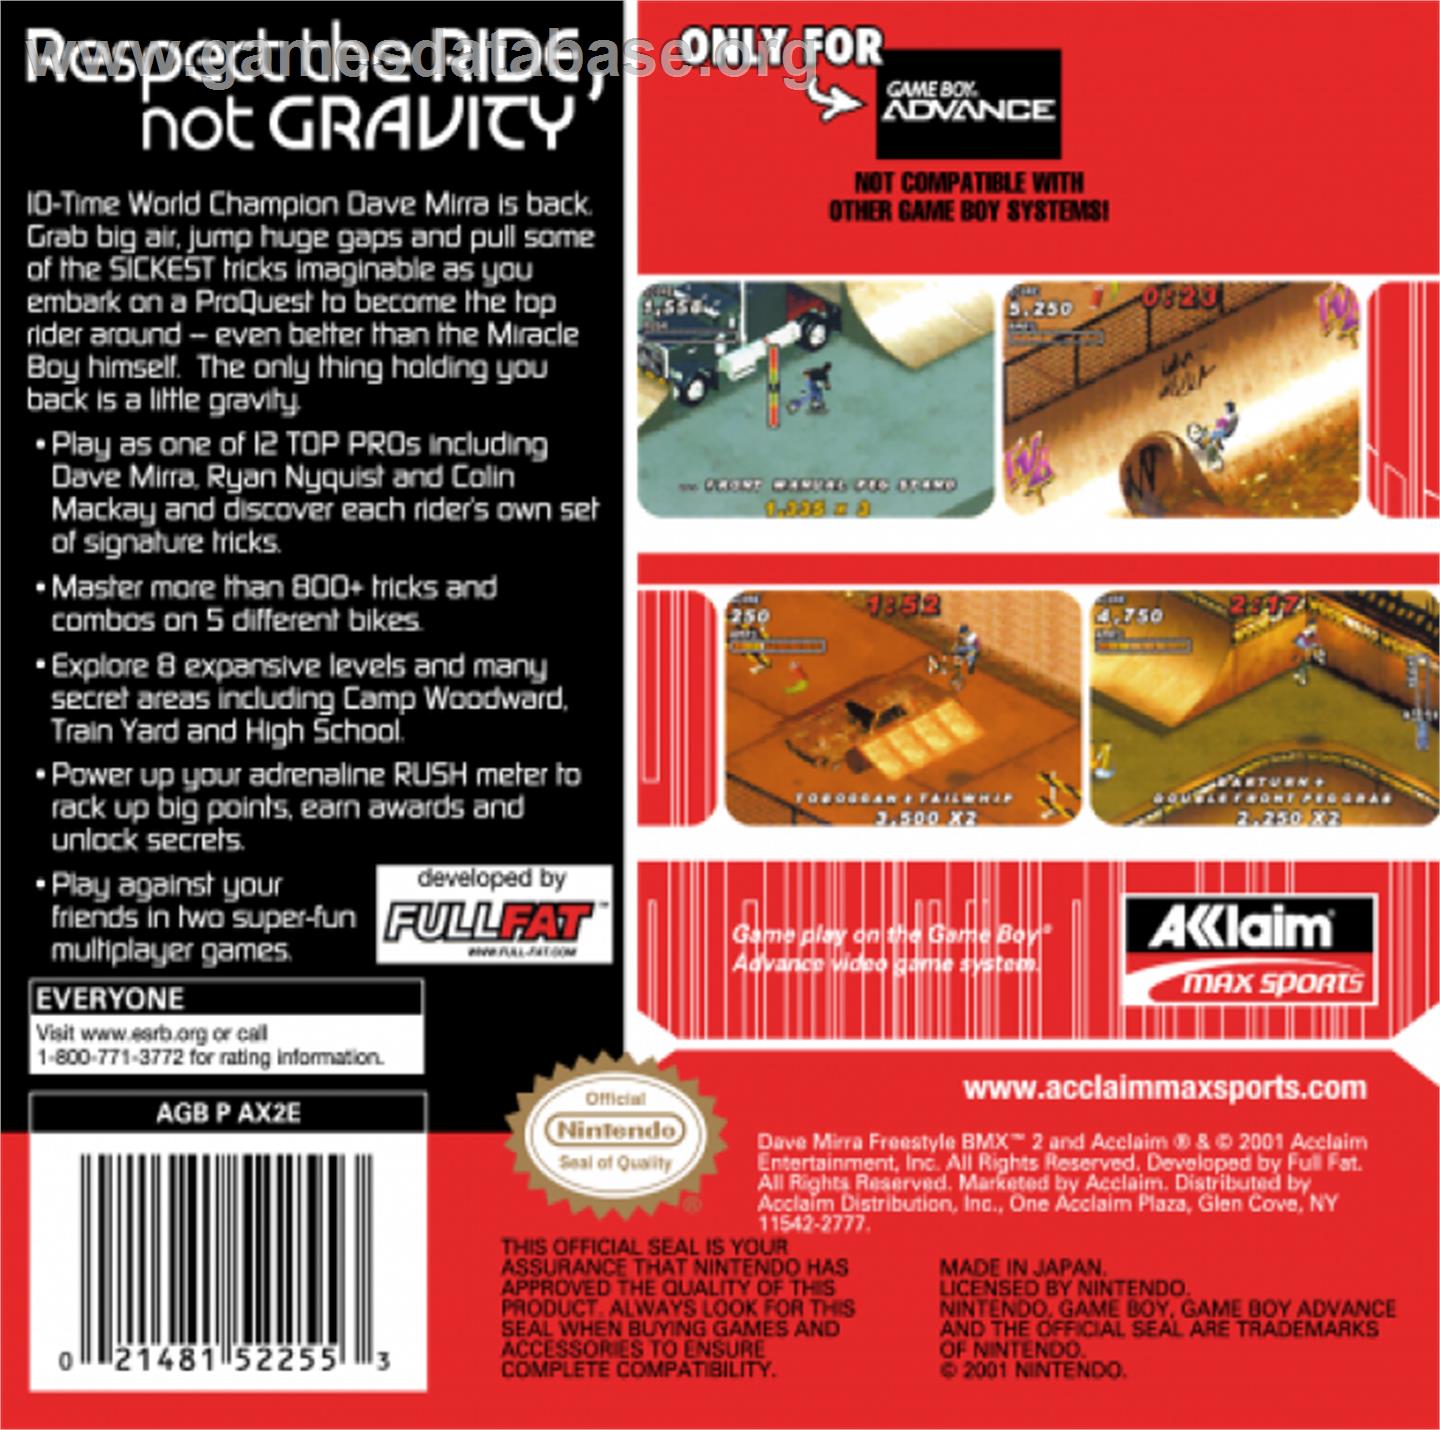 Dave Mirra Freestyle BMX 2 - Nintendo Game Boy Advance - Artwork - Box Back